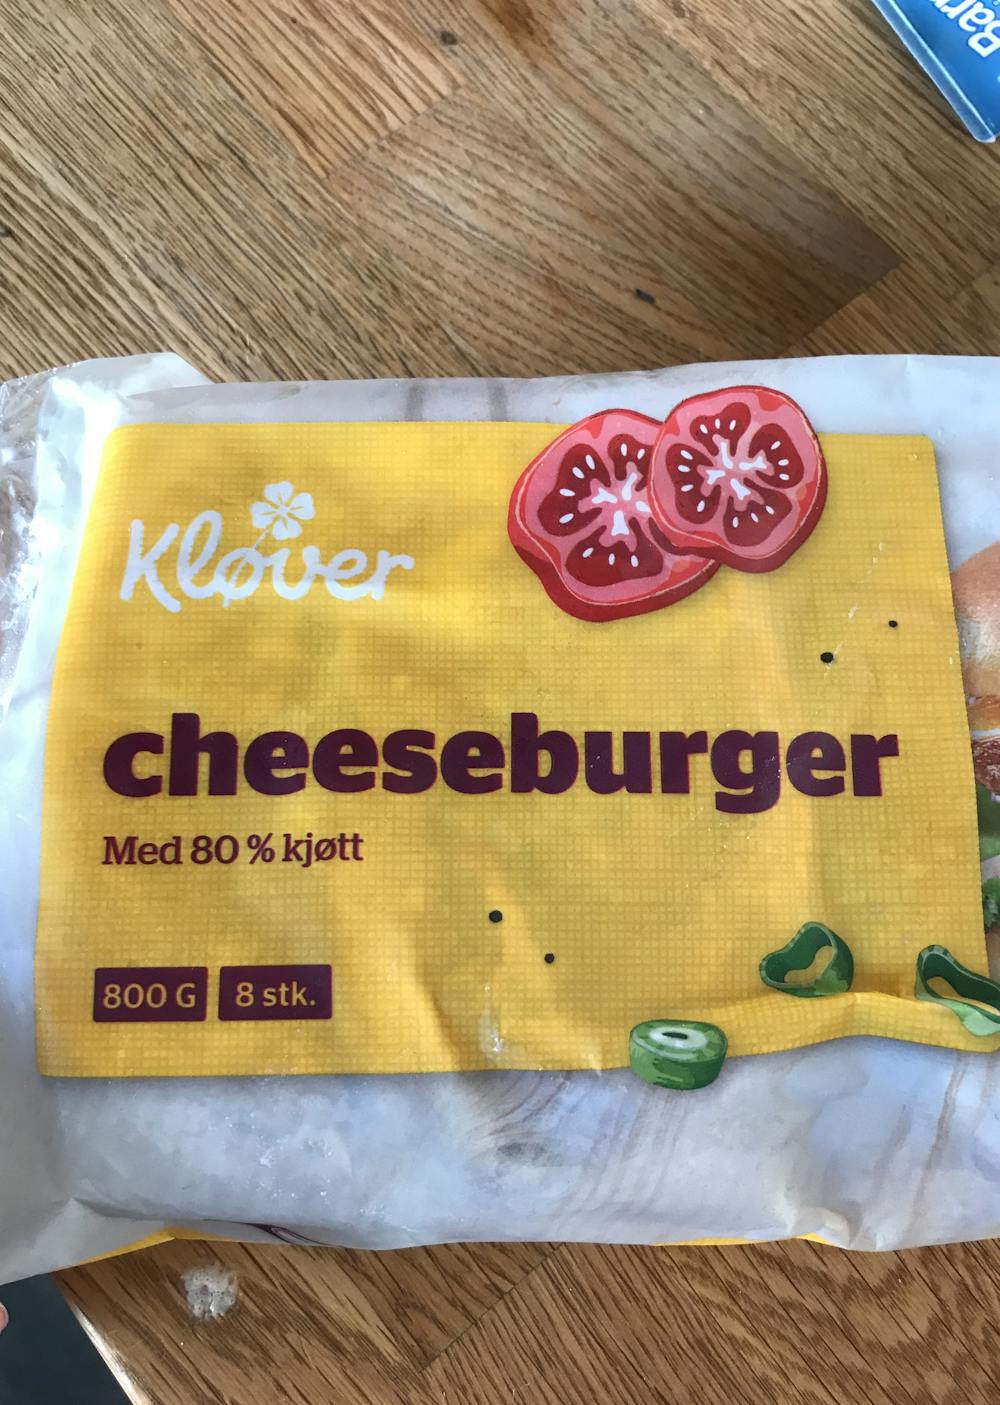 Cheeseburger, Kløver